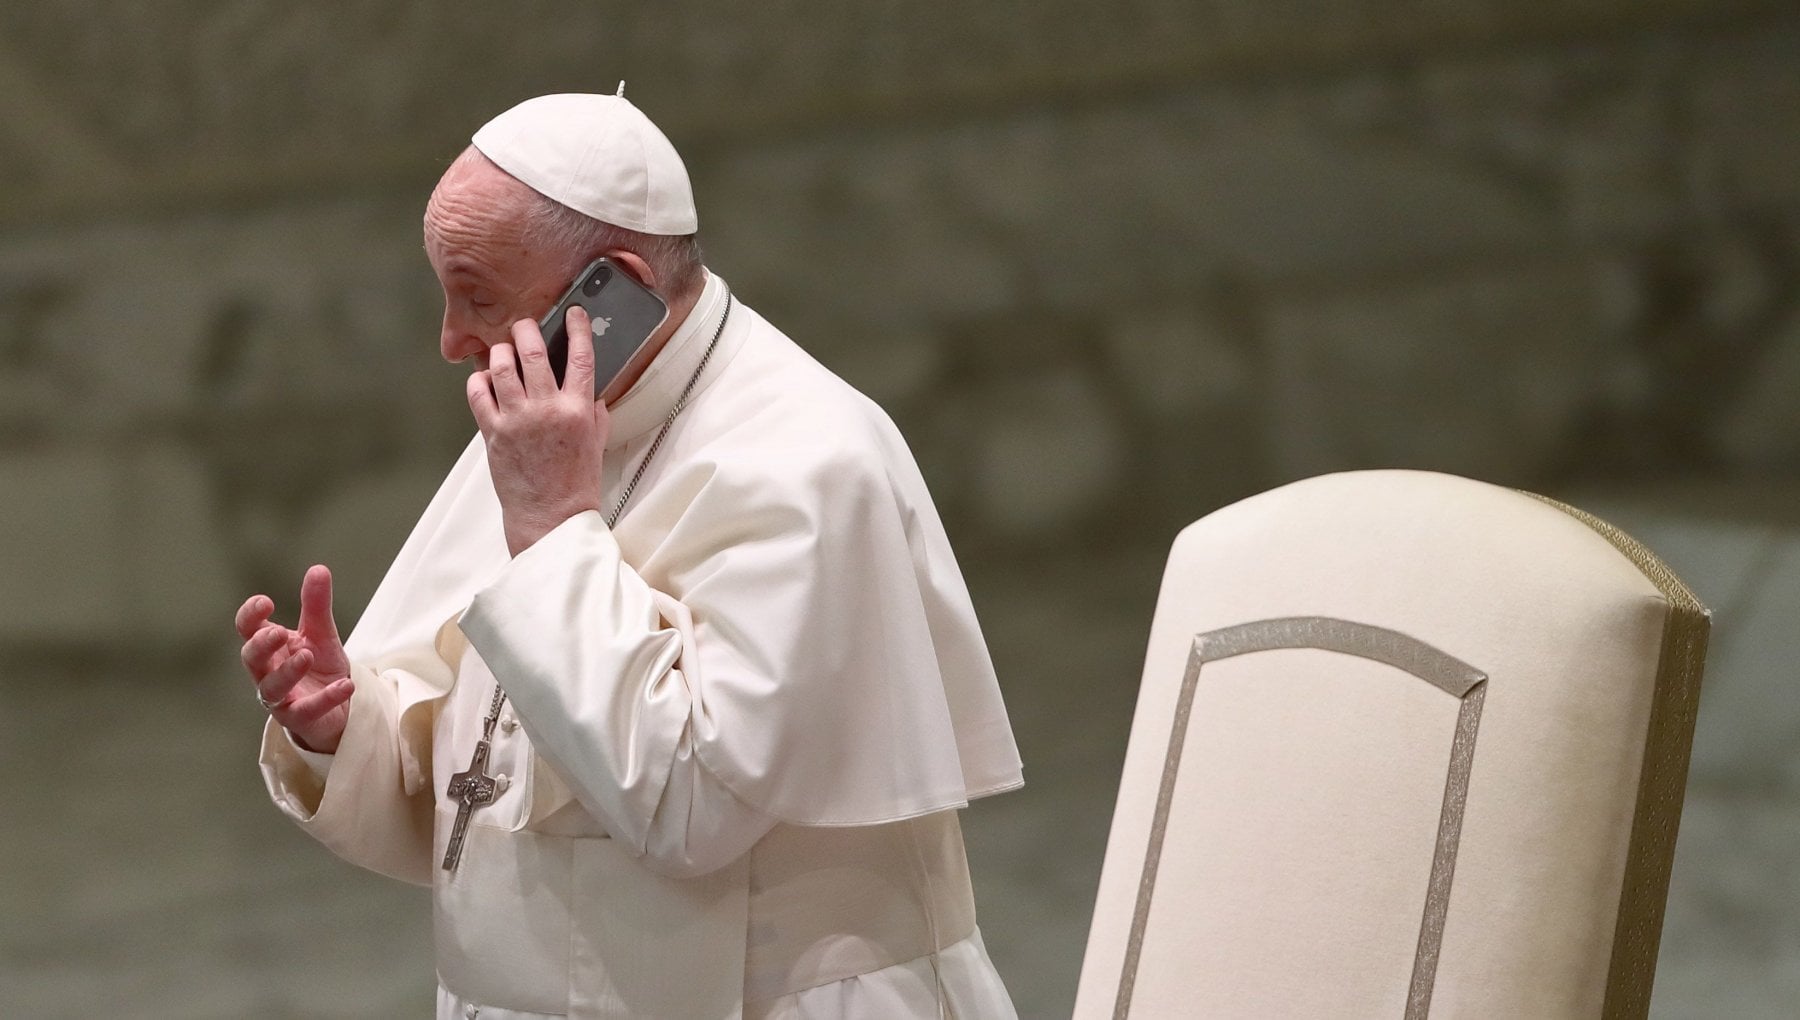 Ucraina, Papa Francesco: "Questa guerra è atroce, torturano anche i bambini"